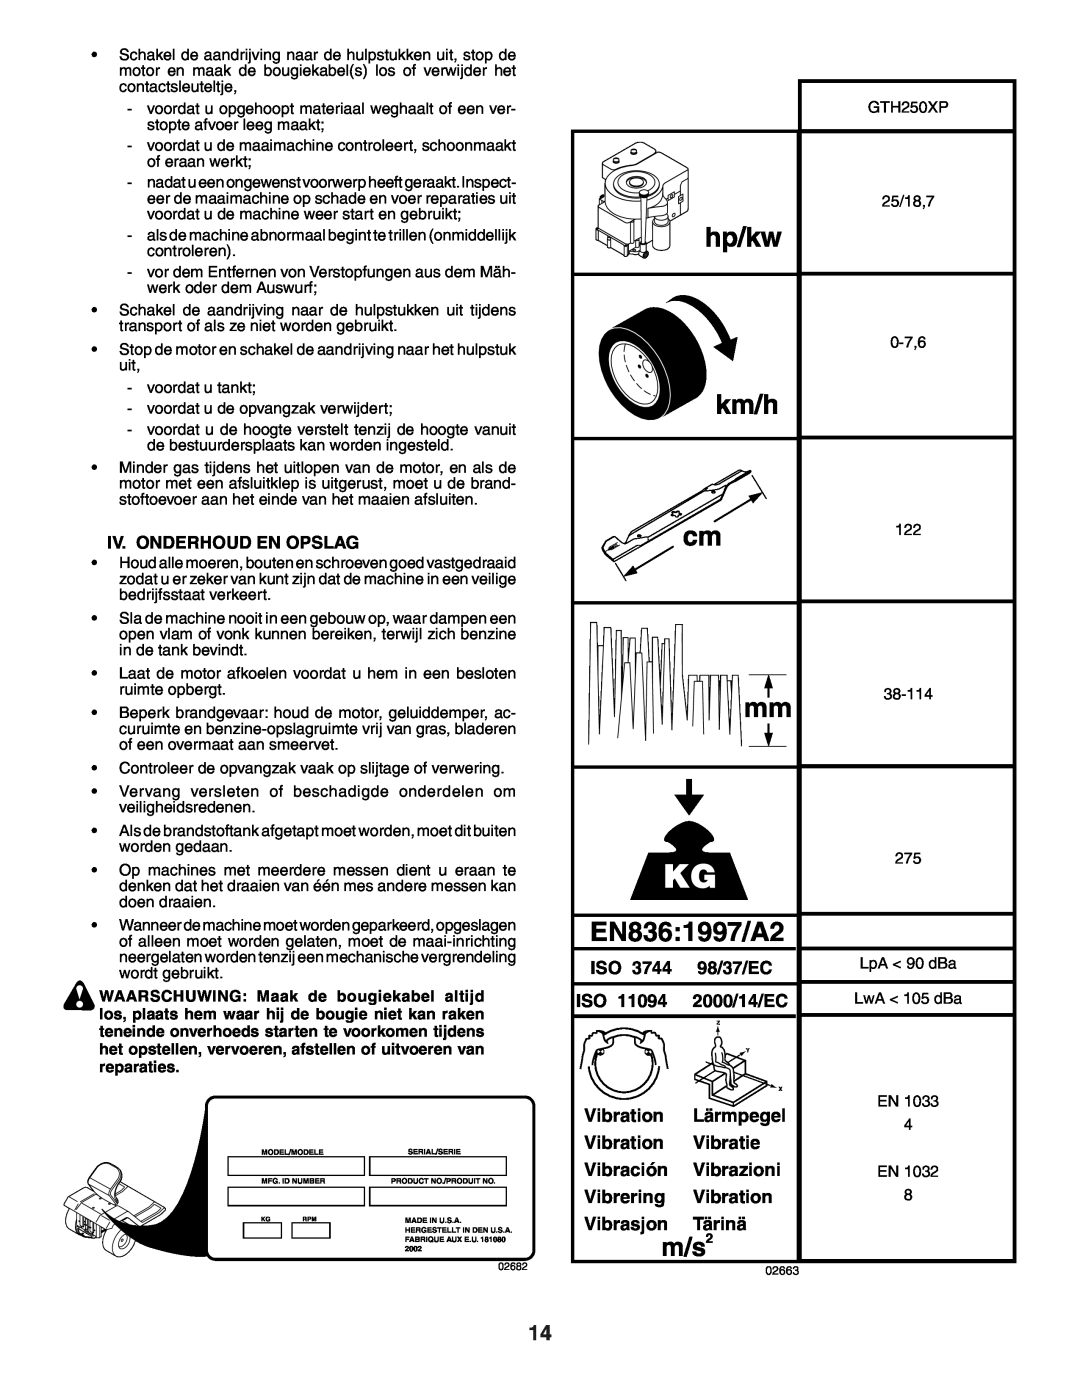 Husqvarna GTH250XP instruction manual EN8361997/A2, m/s2 